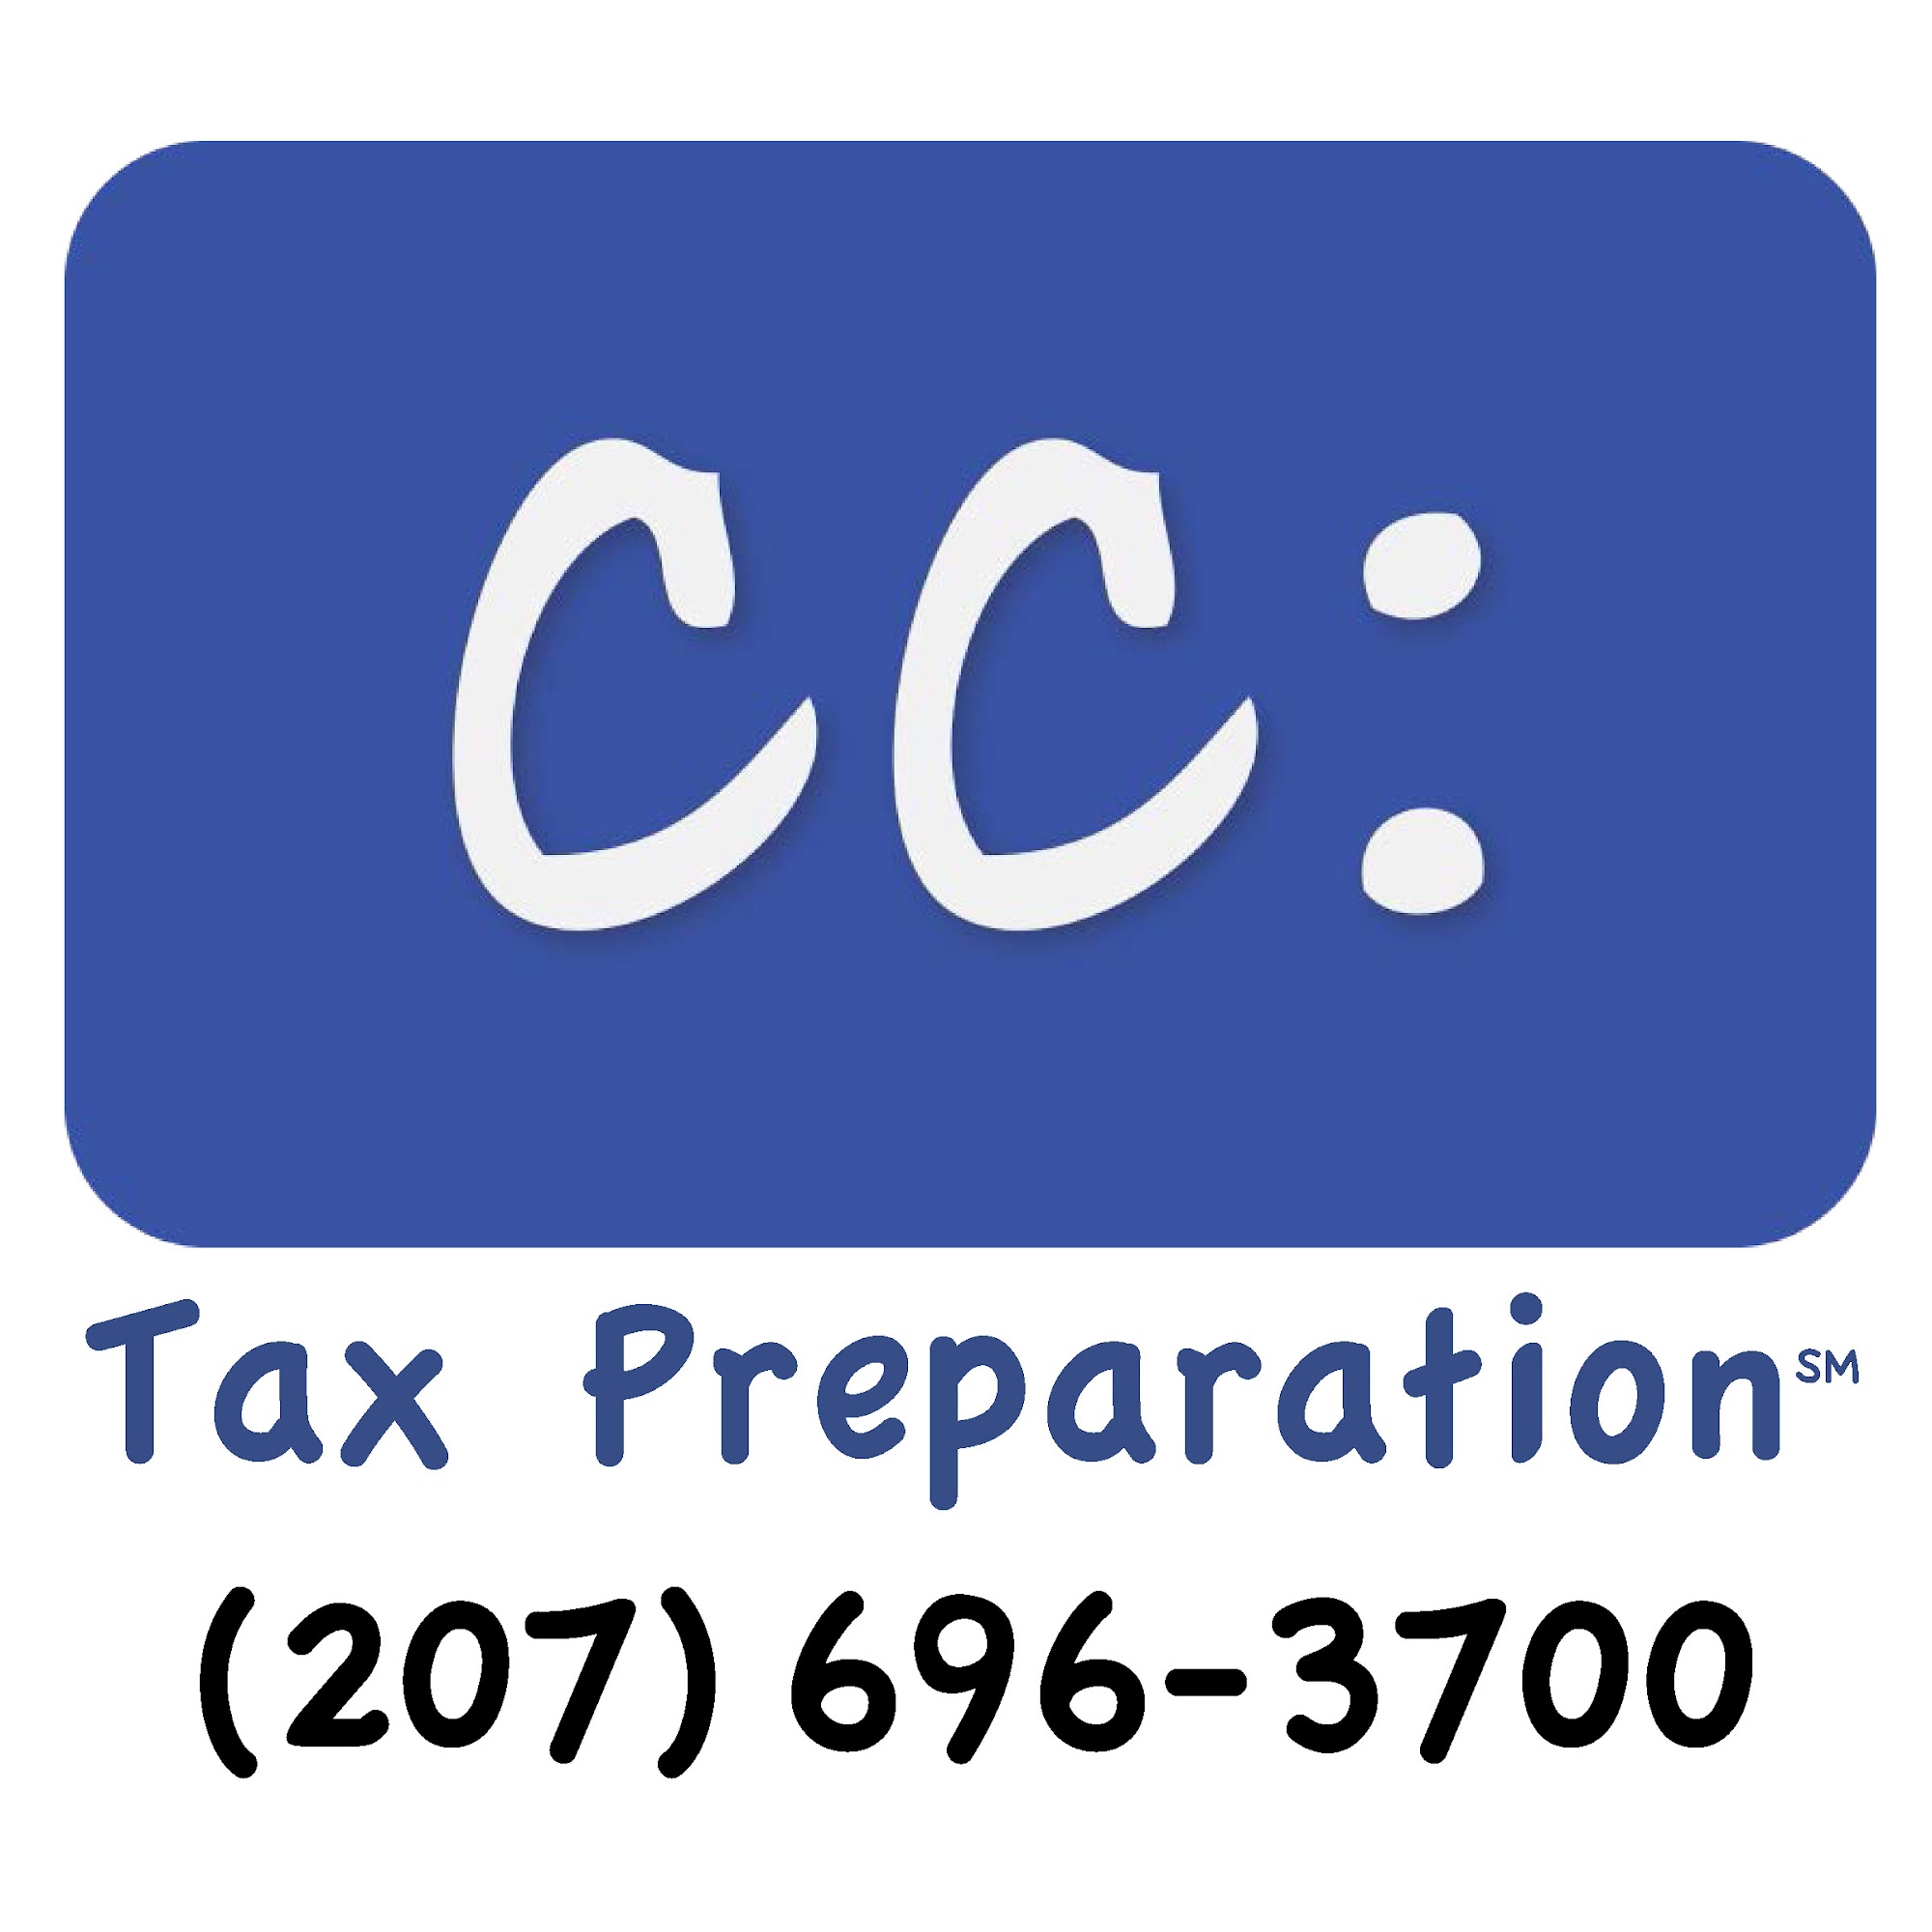 CC: Tax Preparation 73 Main St, Madison Maine 04950